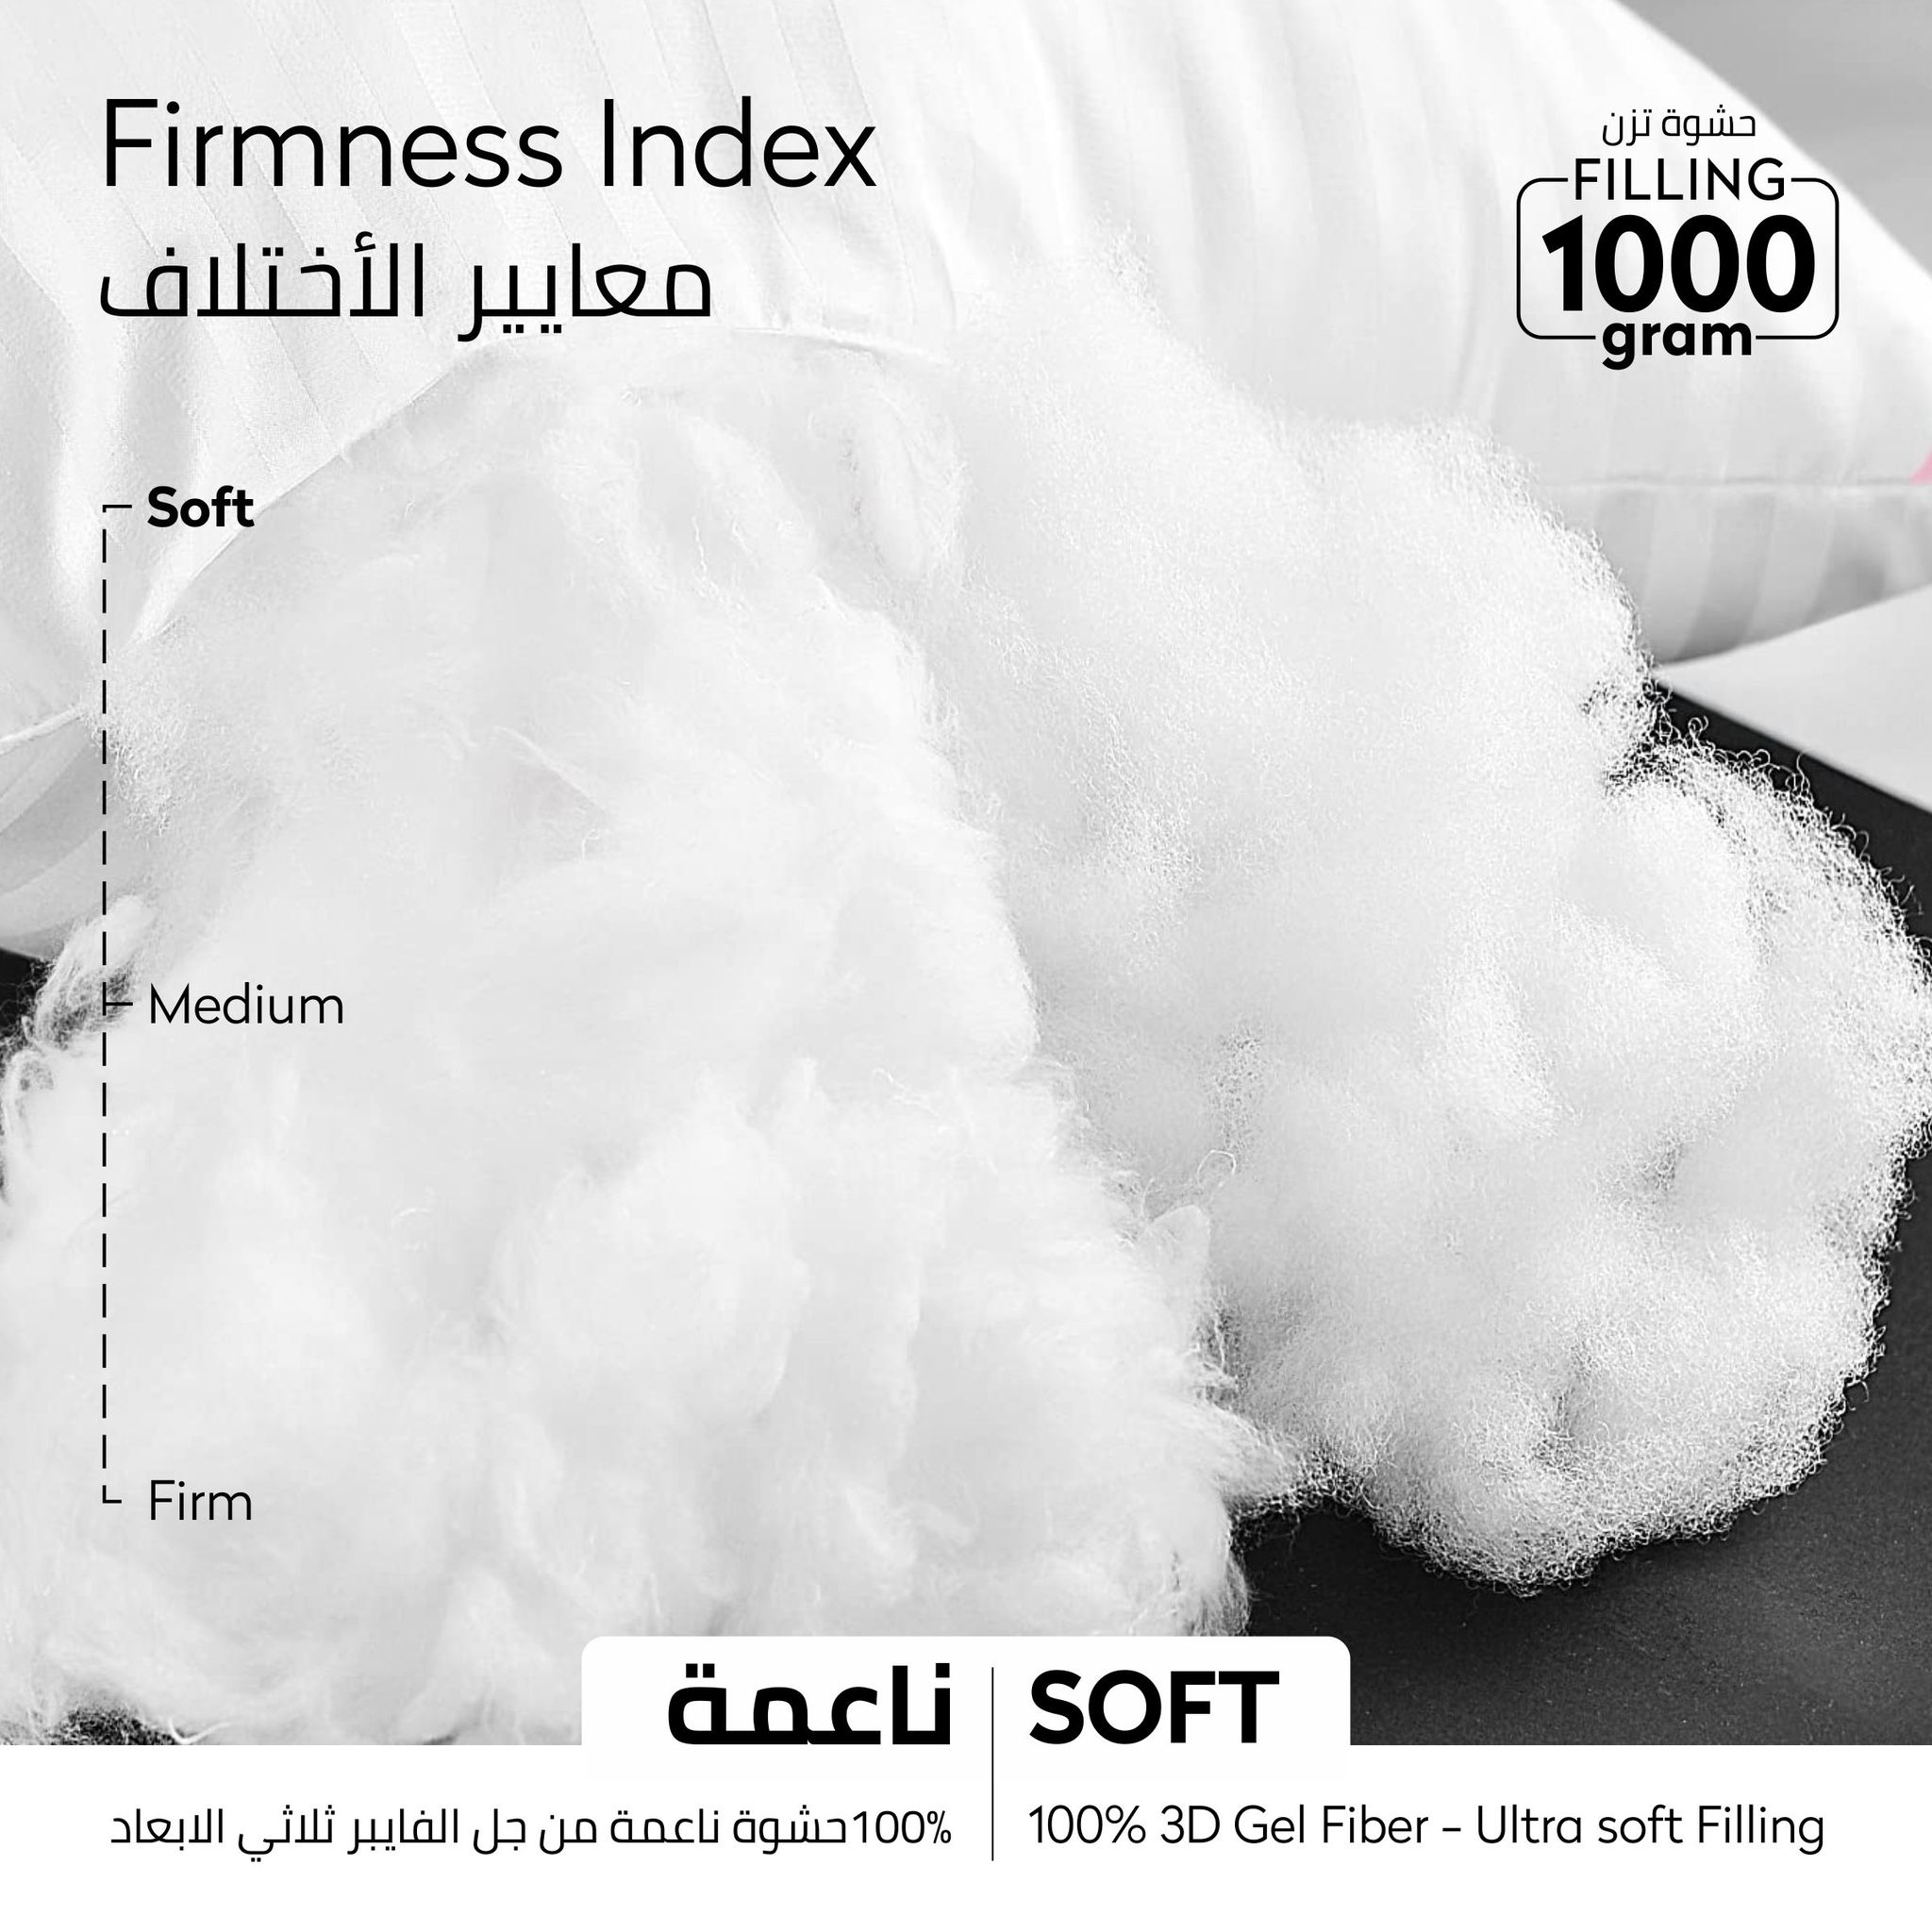 4-Piece Anti Allergy King Size Bed Pillow Microfiber White 50x75cm